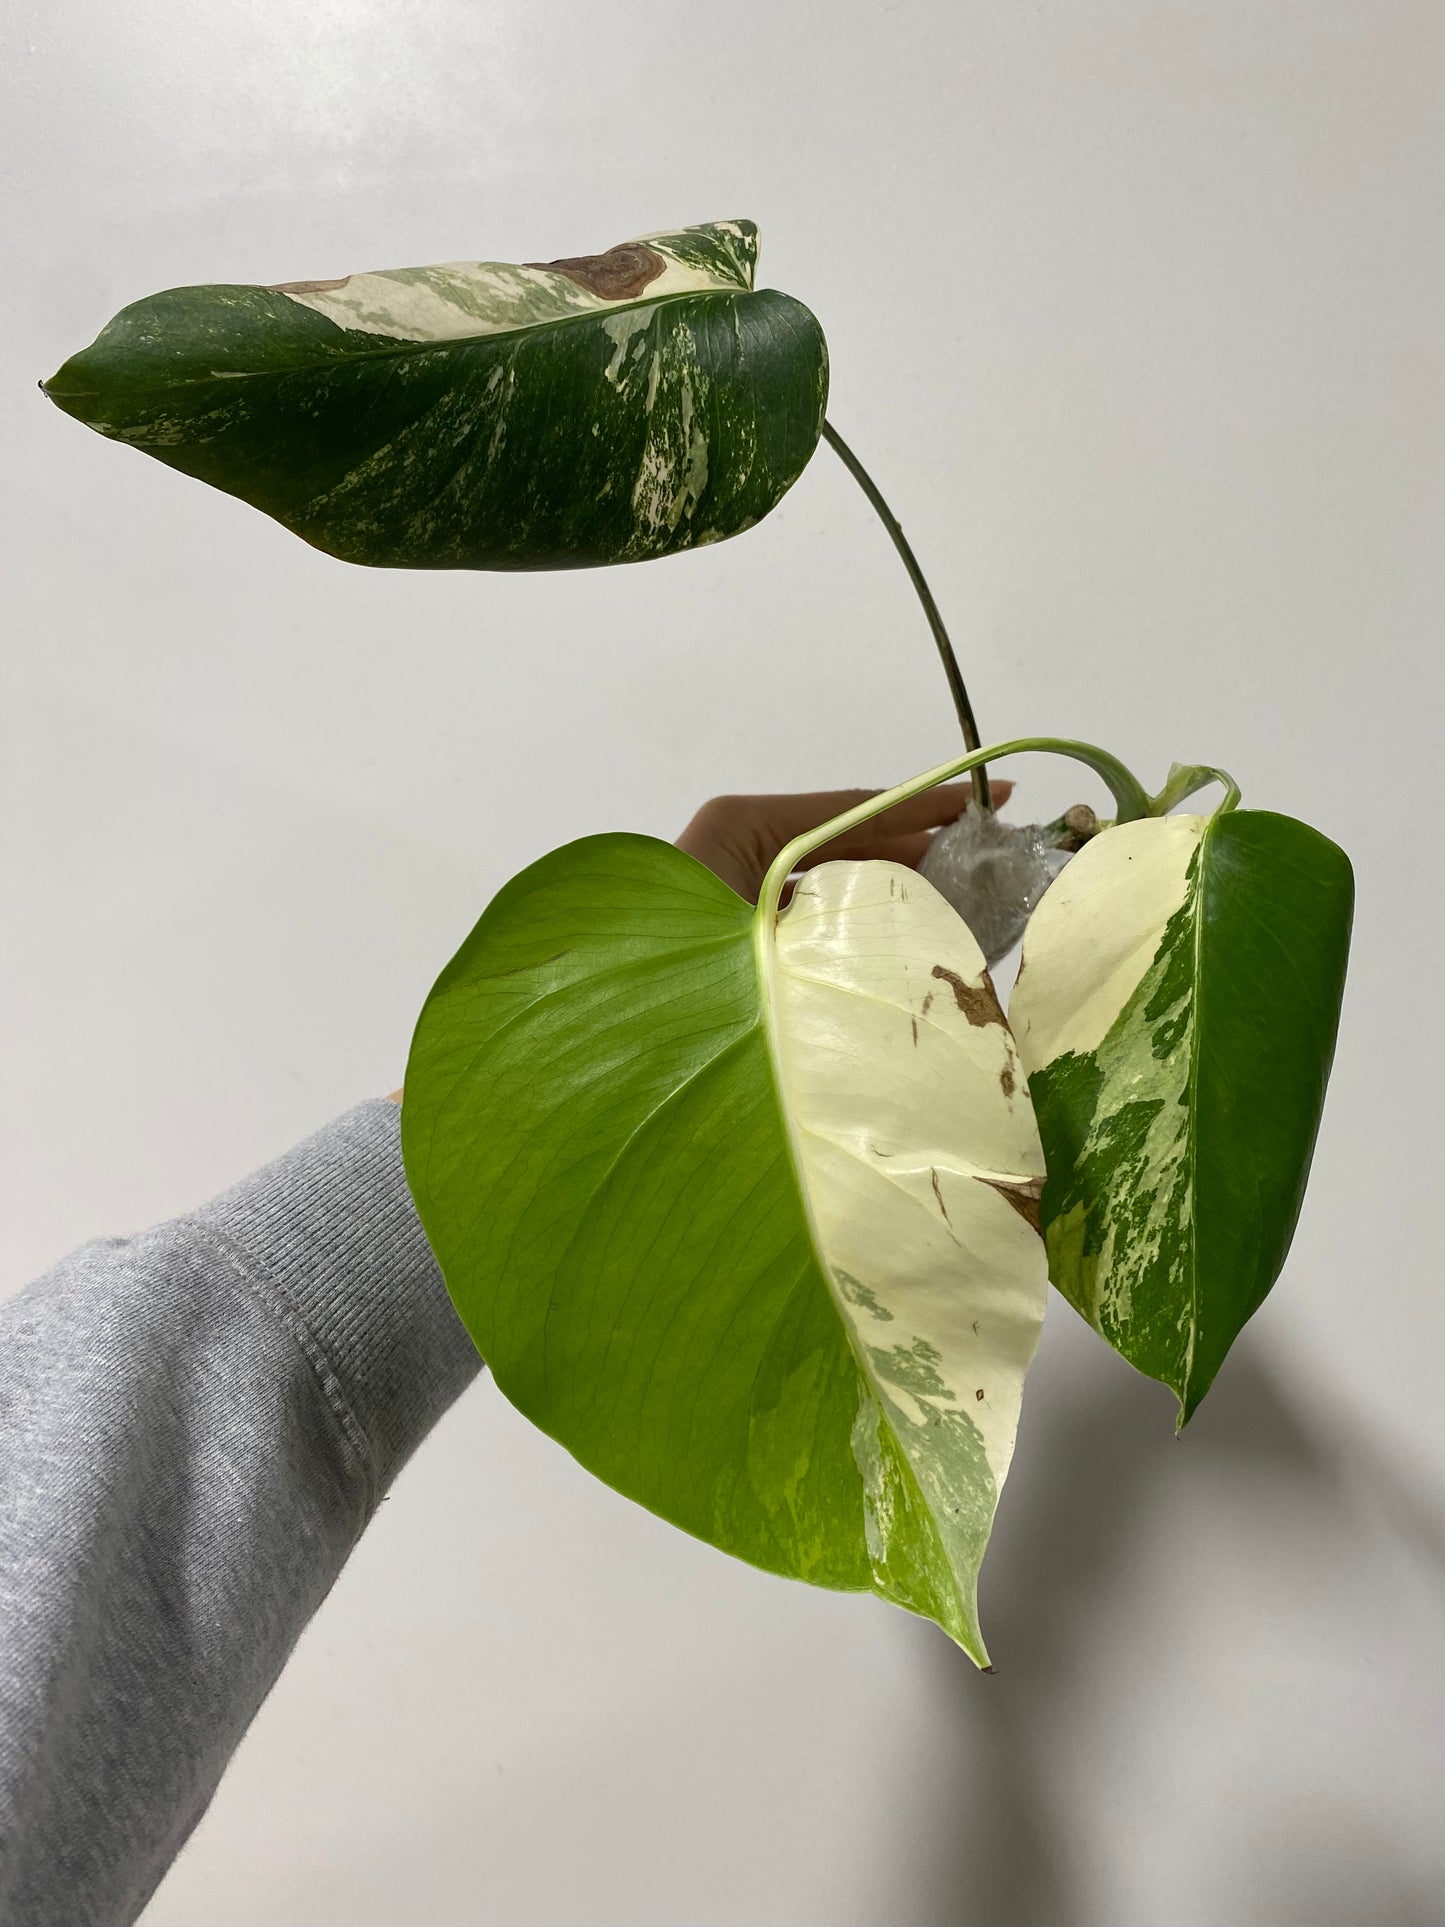 Monstera deliciosa "Albo" variegated SM-MD 2-3 leaves